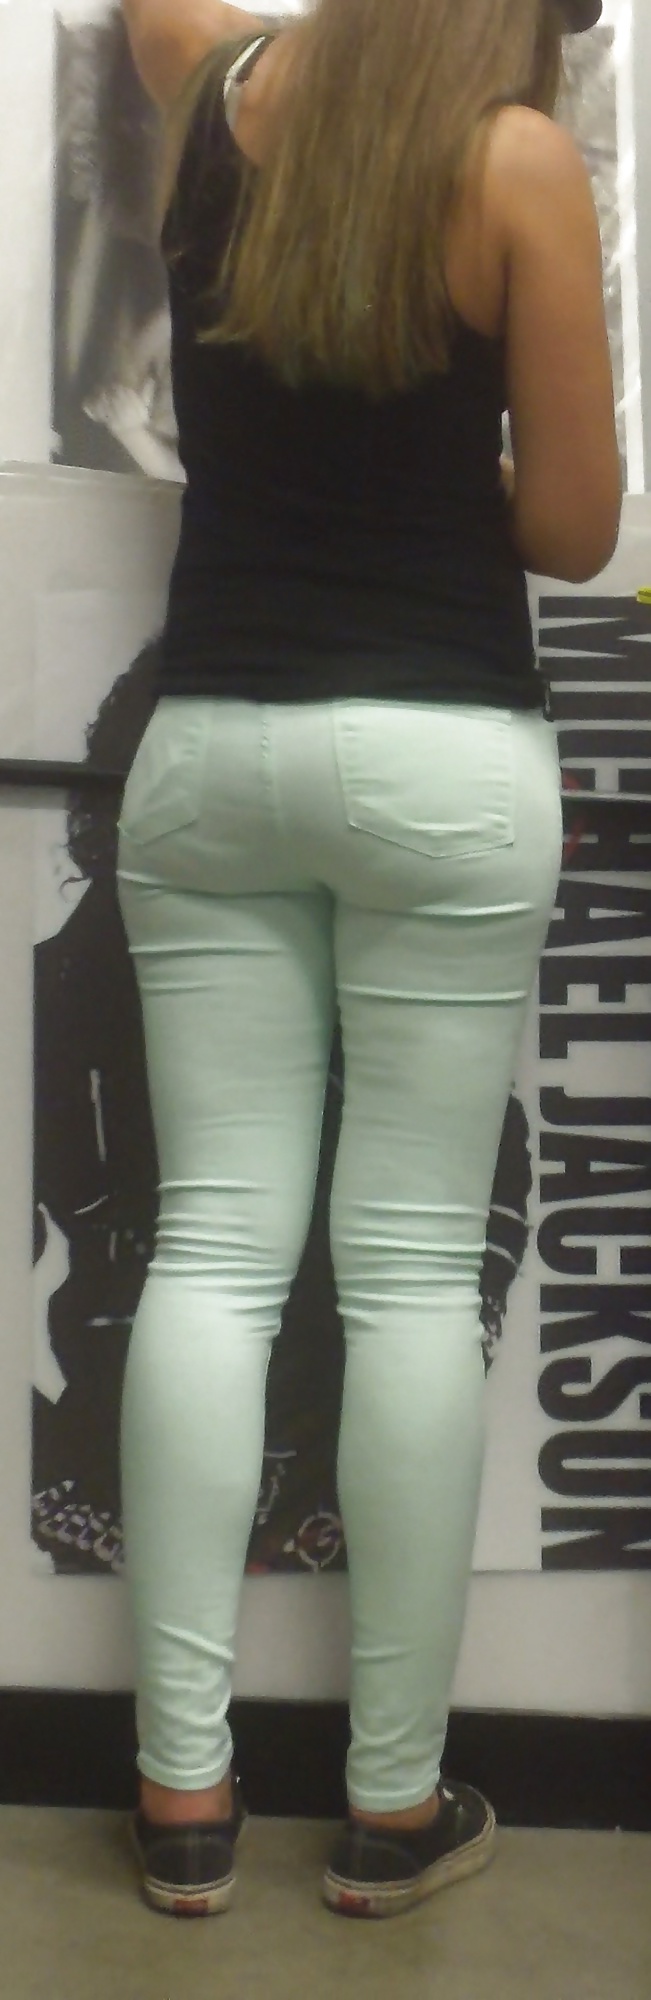 Big juicy teen ass & butt in jeans #32681957